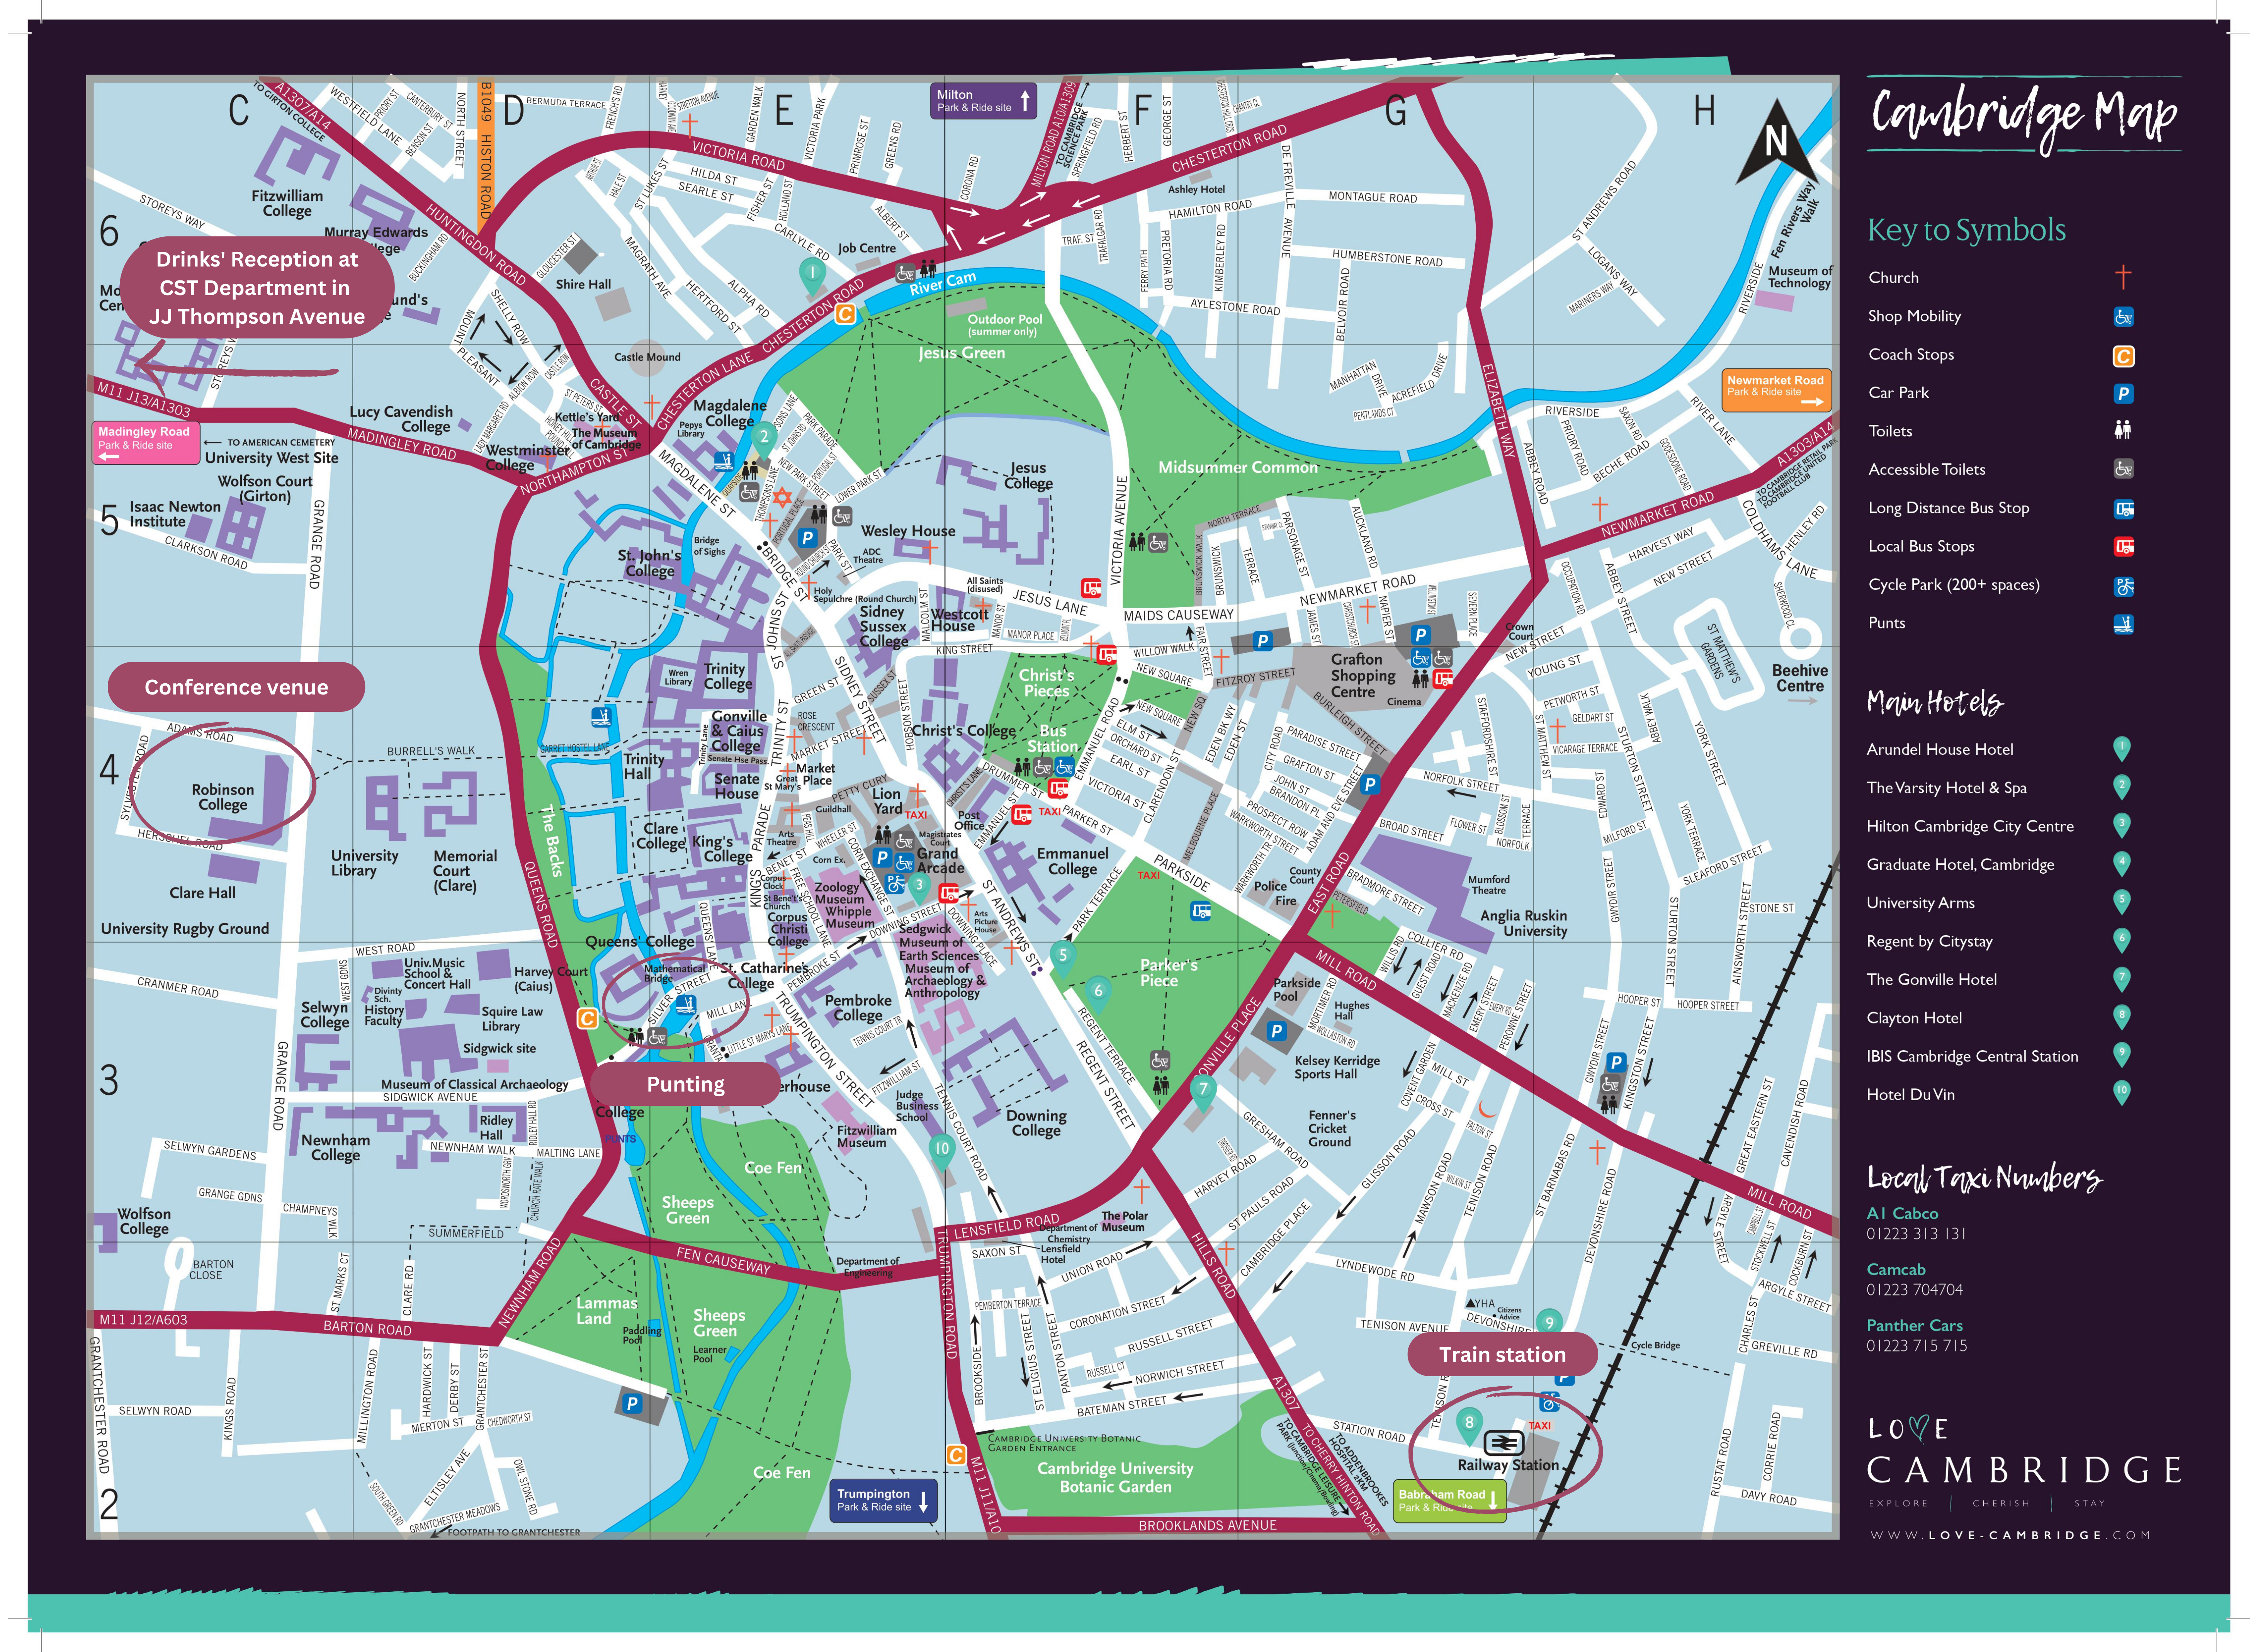 Map of Cambridge city centre showing main venues